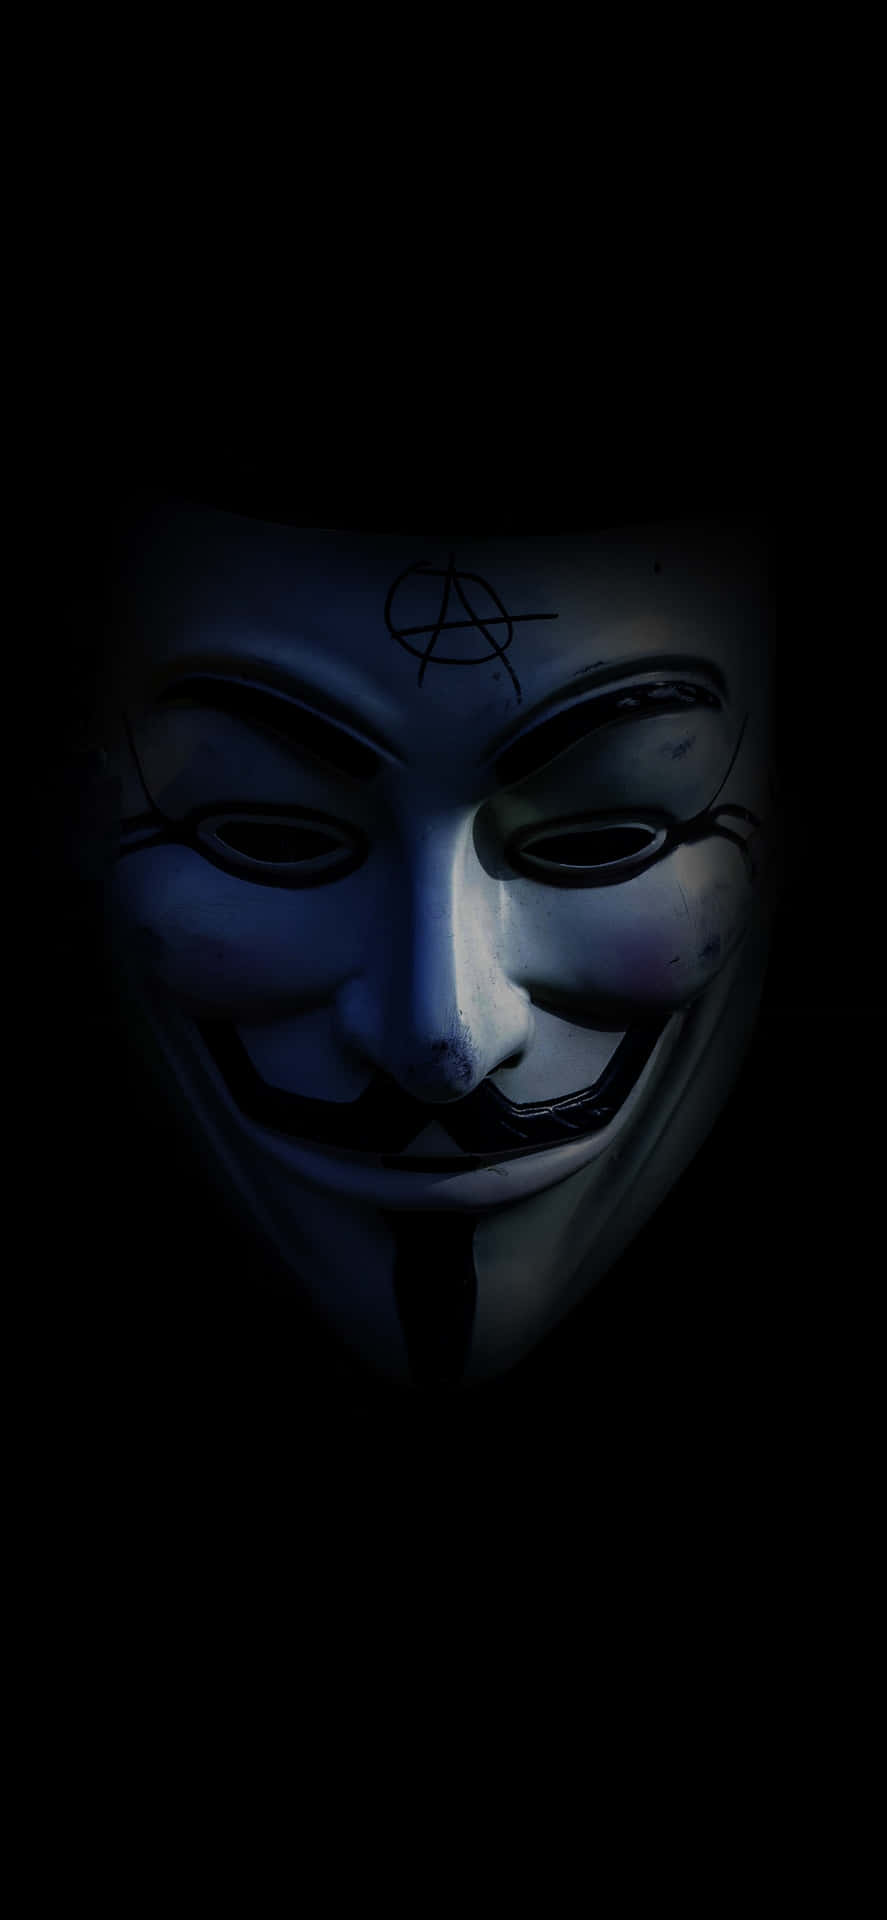 A Dark Image Of An V For Vendetta Mask Wallpaper